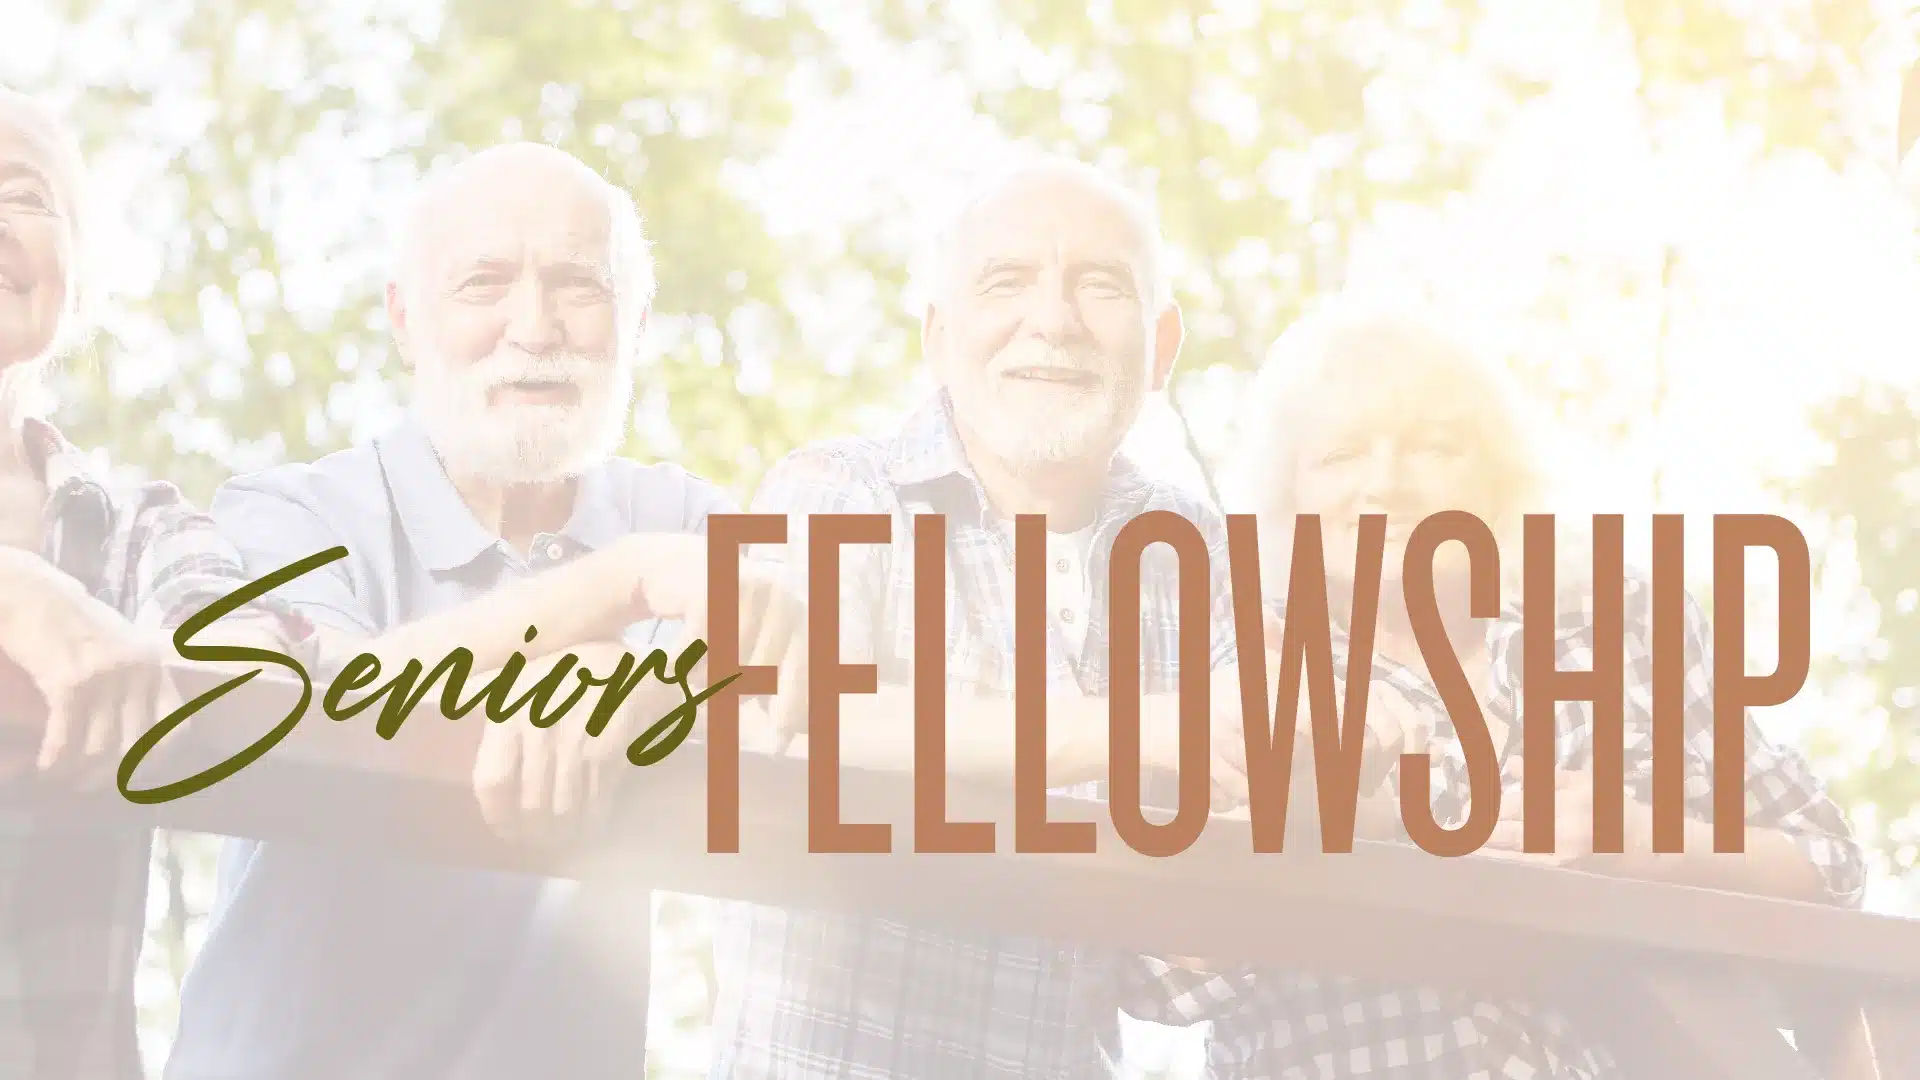 Seniors Fellowship